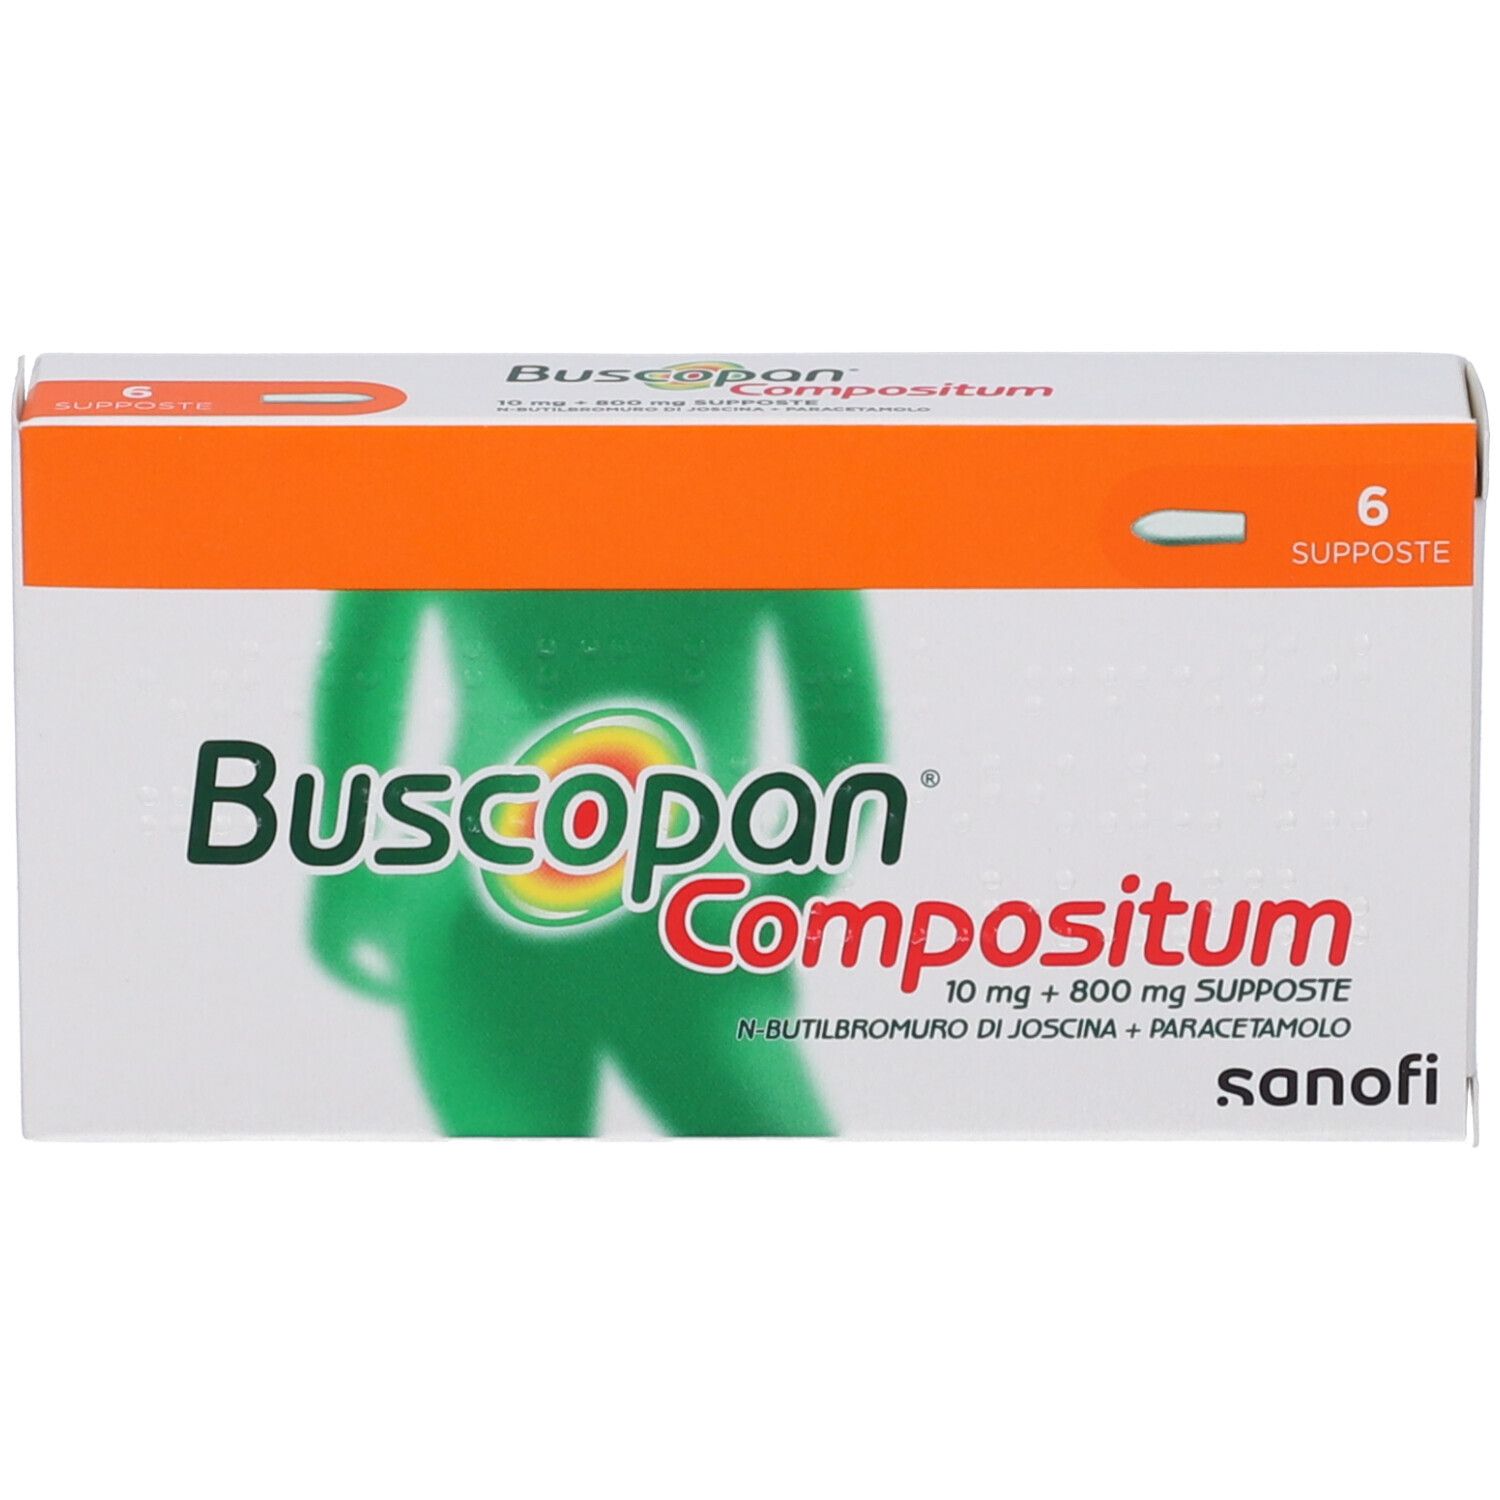 Buscopan® Compositum Supposte